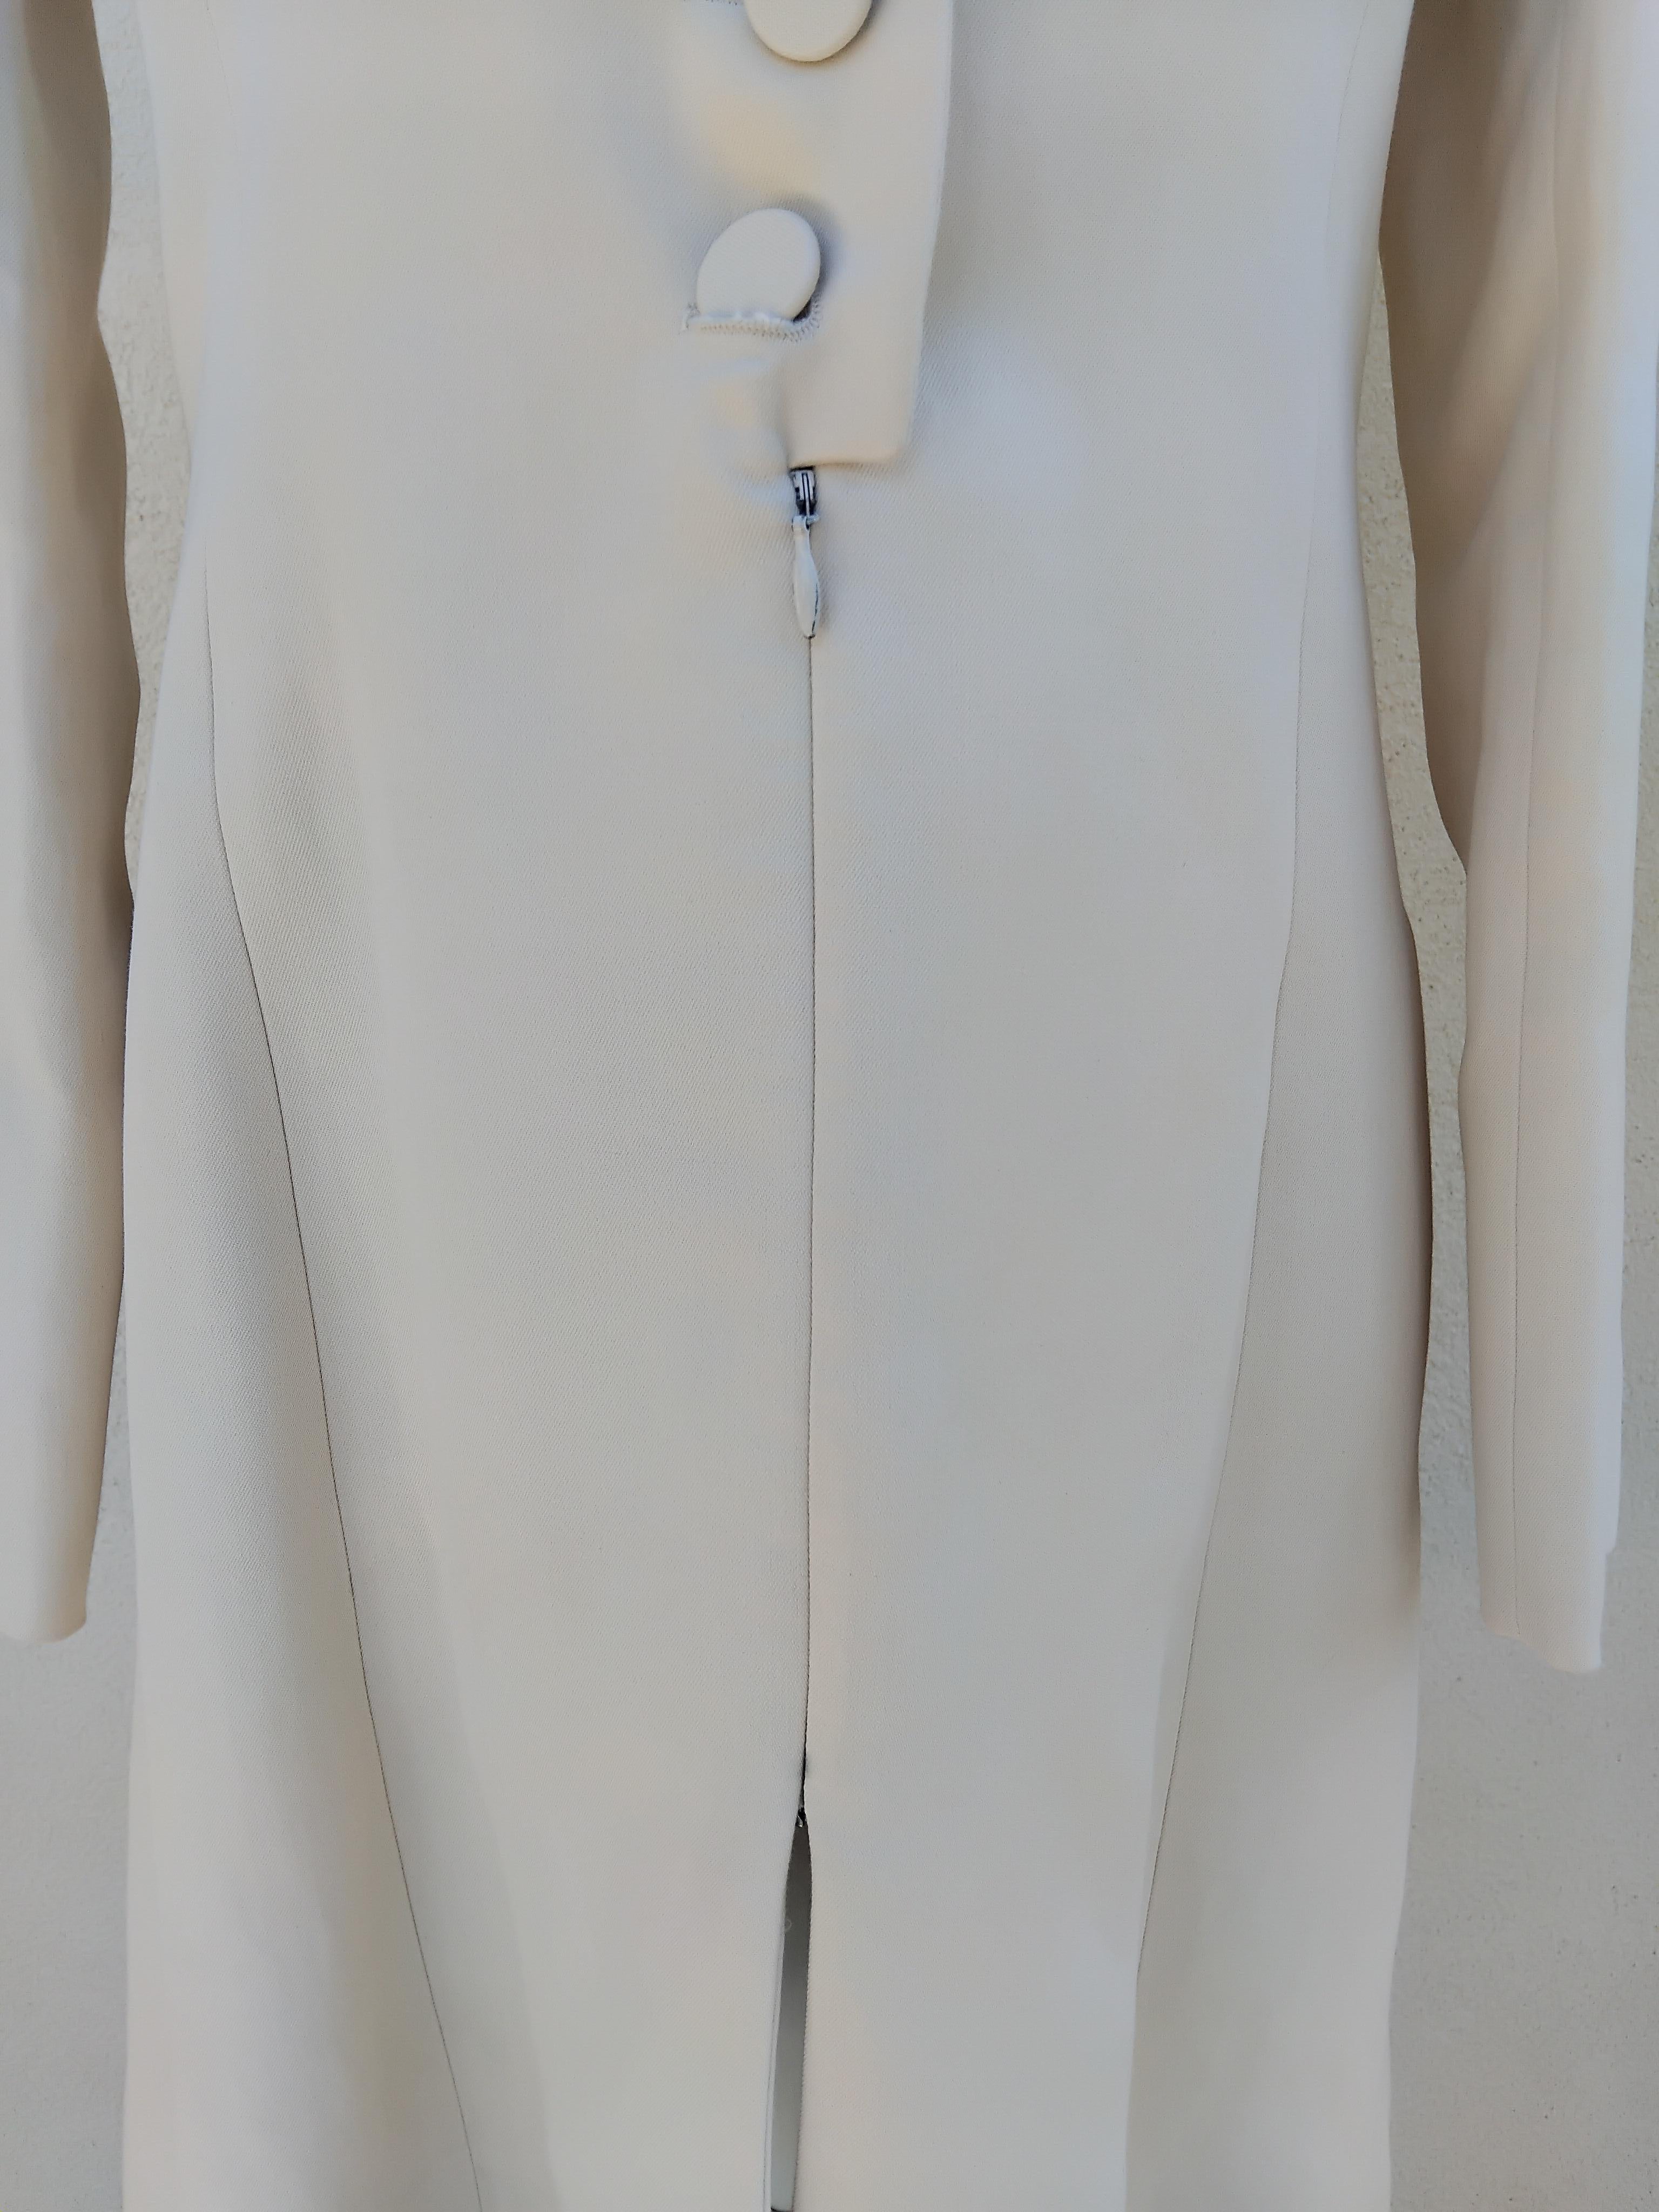 Gorgeous Hermès Spring Coat Ivory Mao Collar Size 36 FR 2-4 US For Sale 4